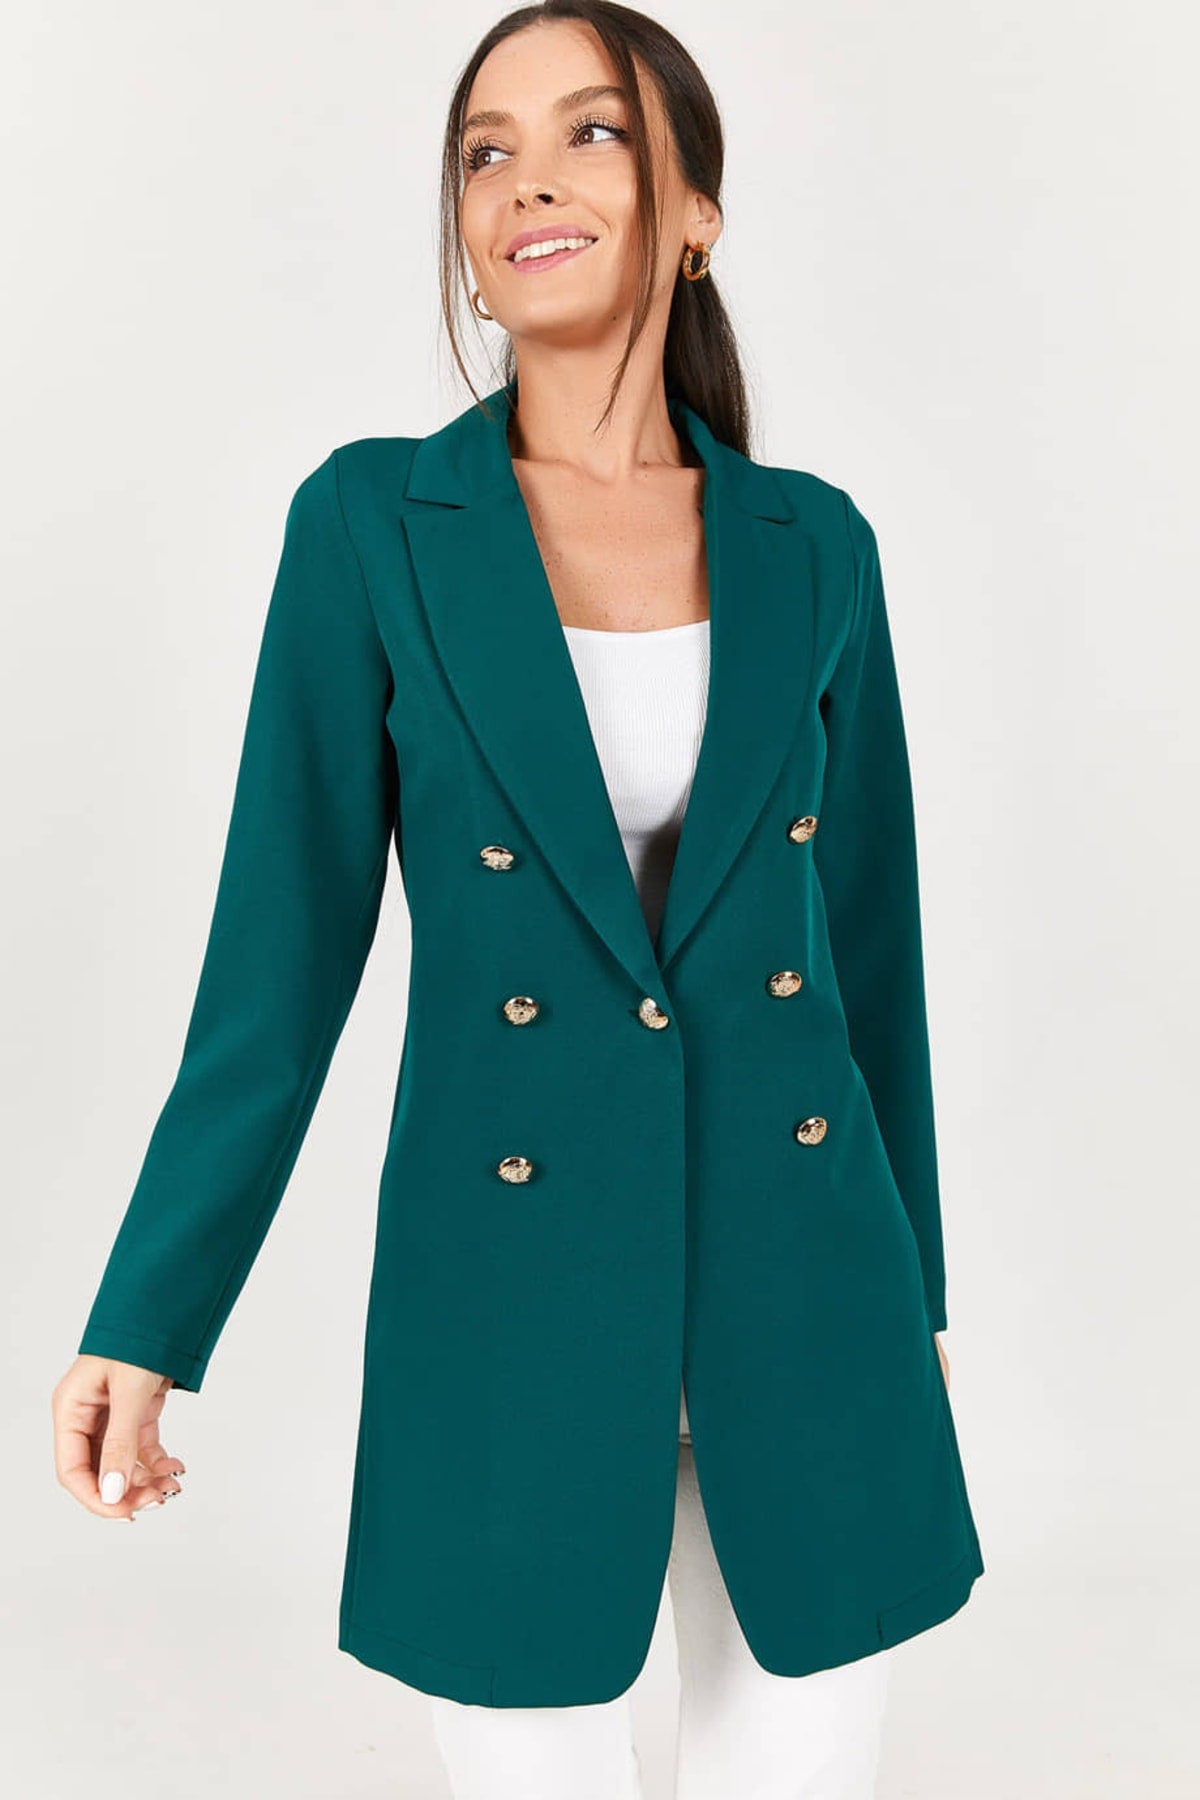 Buttoned woman long jacket dark green